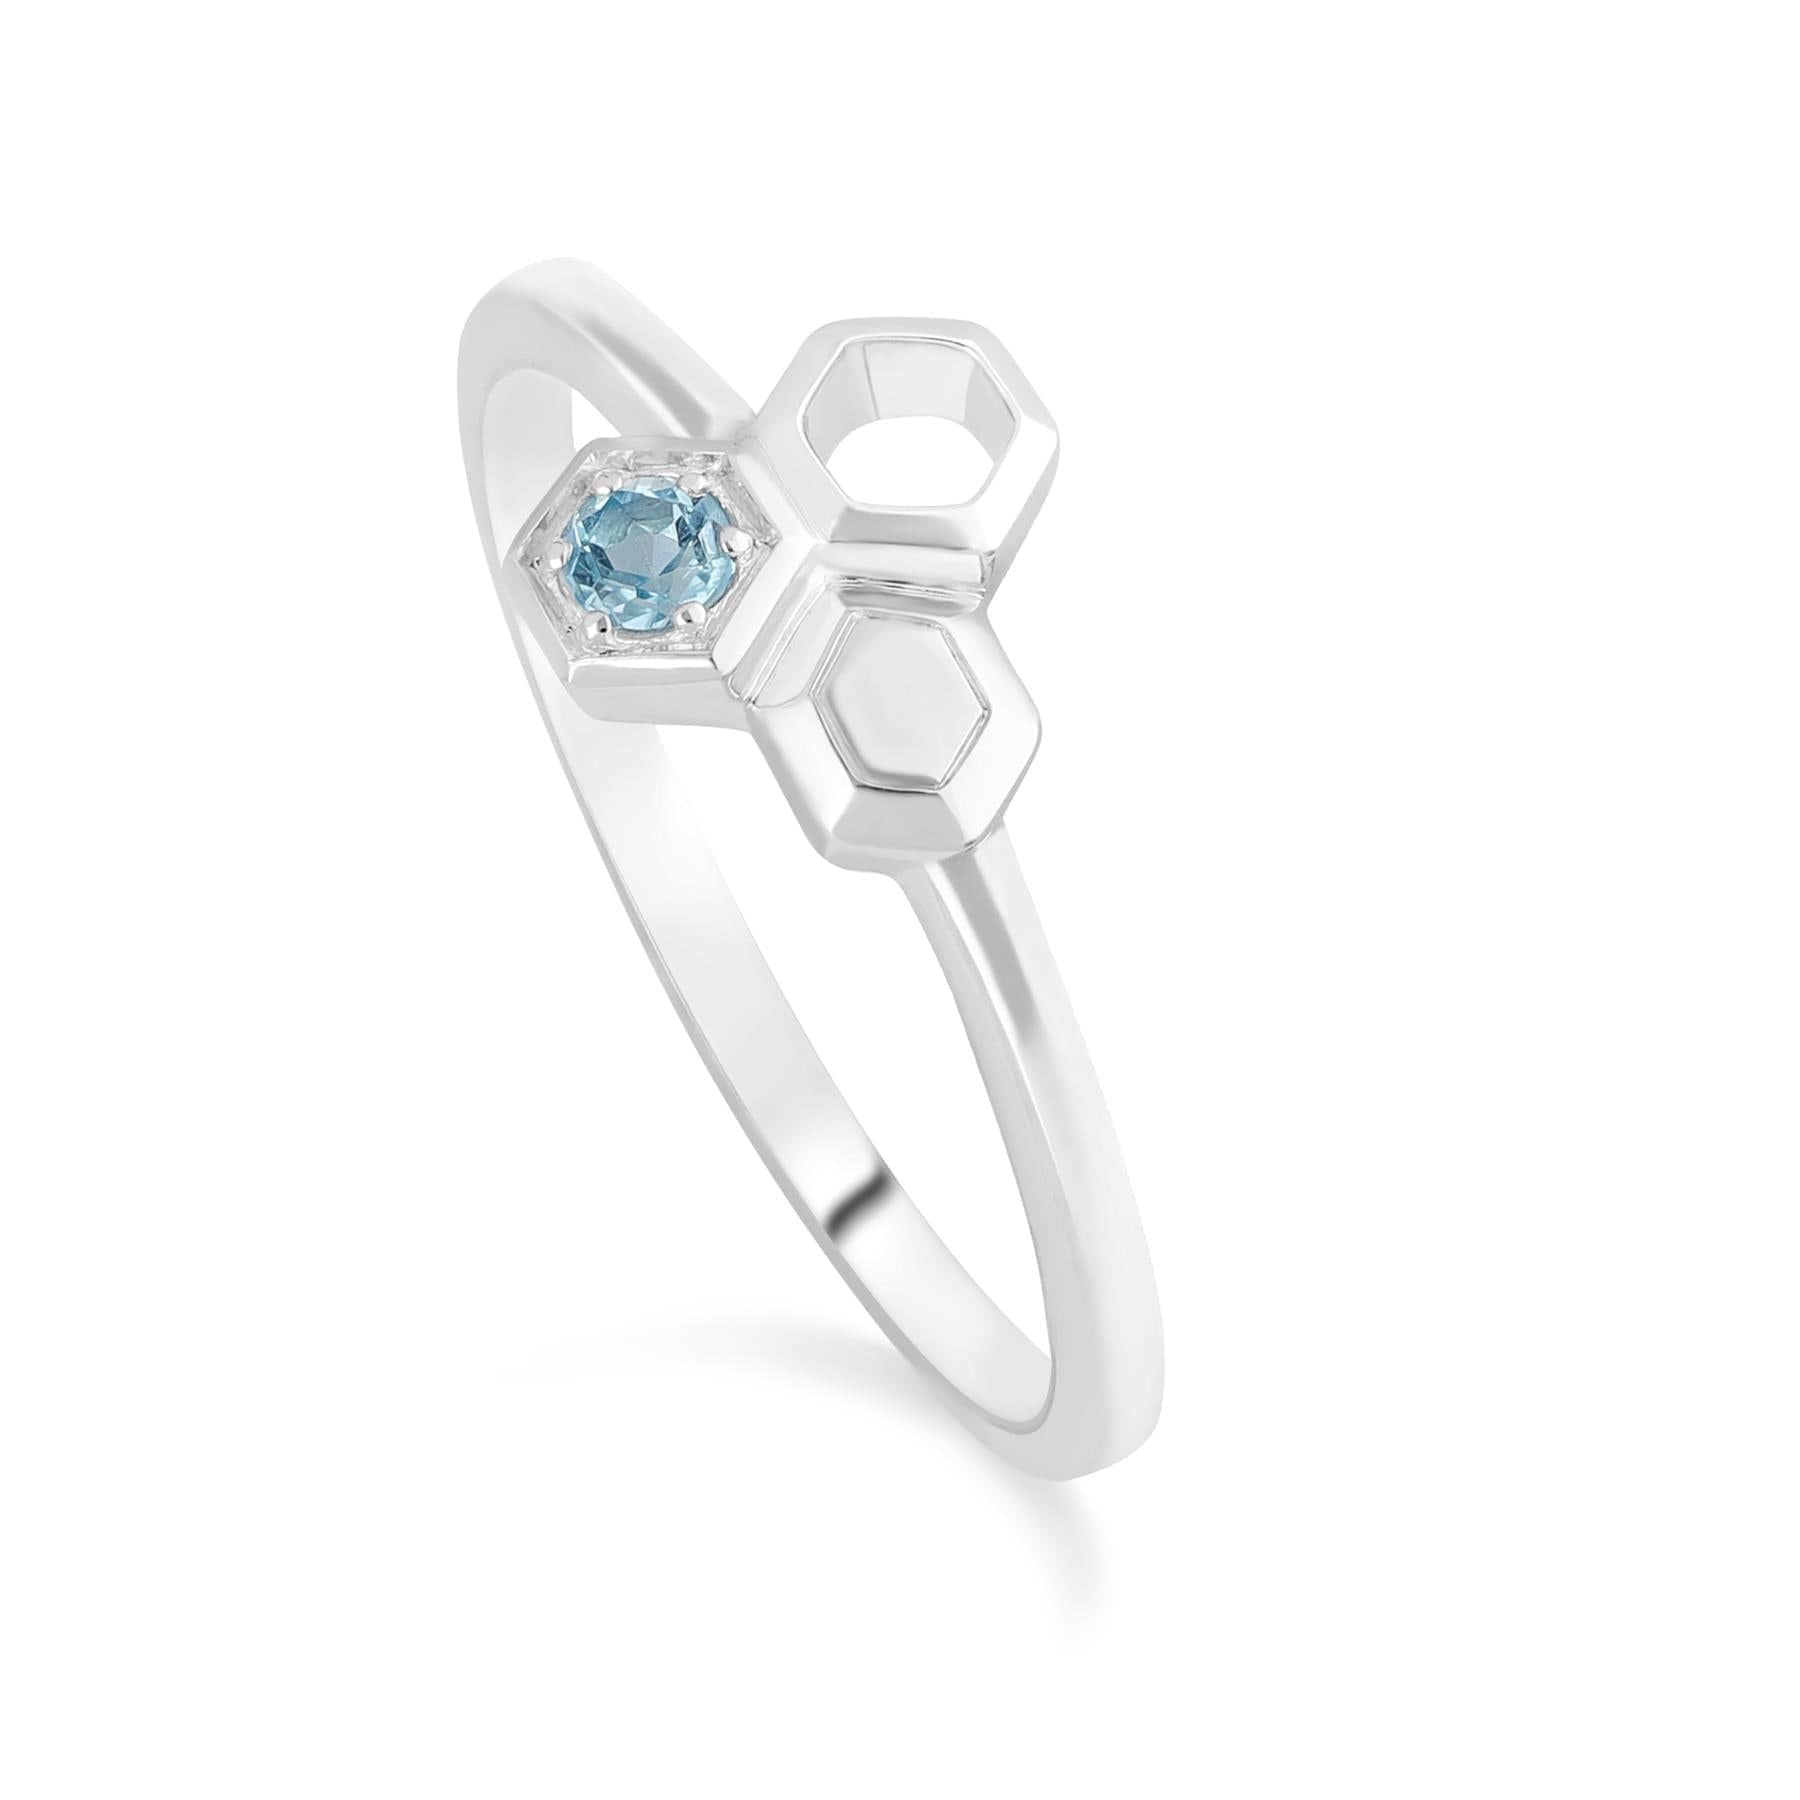 Gemondo Honeycomb Inspired Blue Topaz Sterling Silver Ring